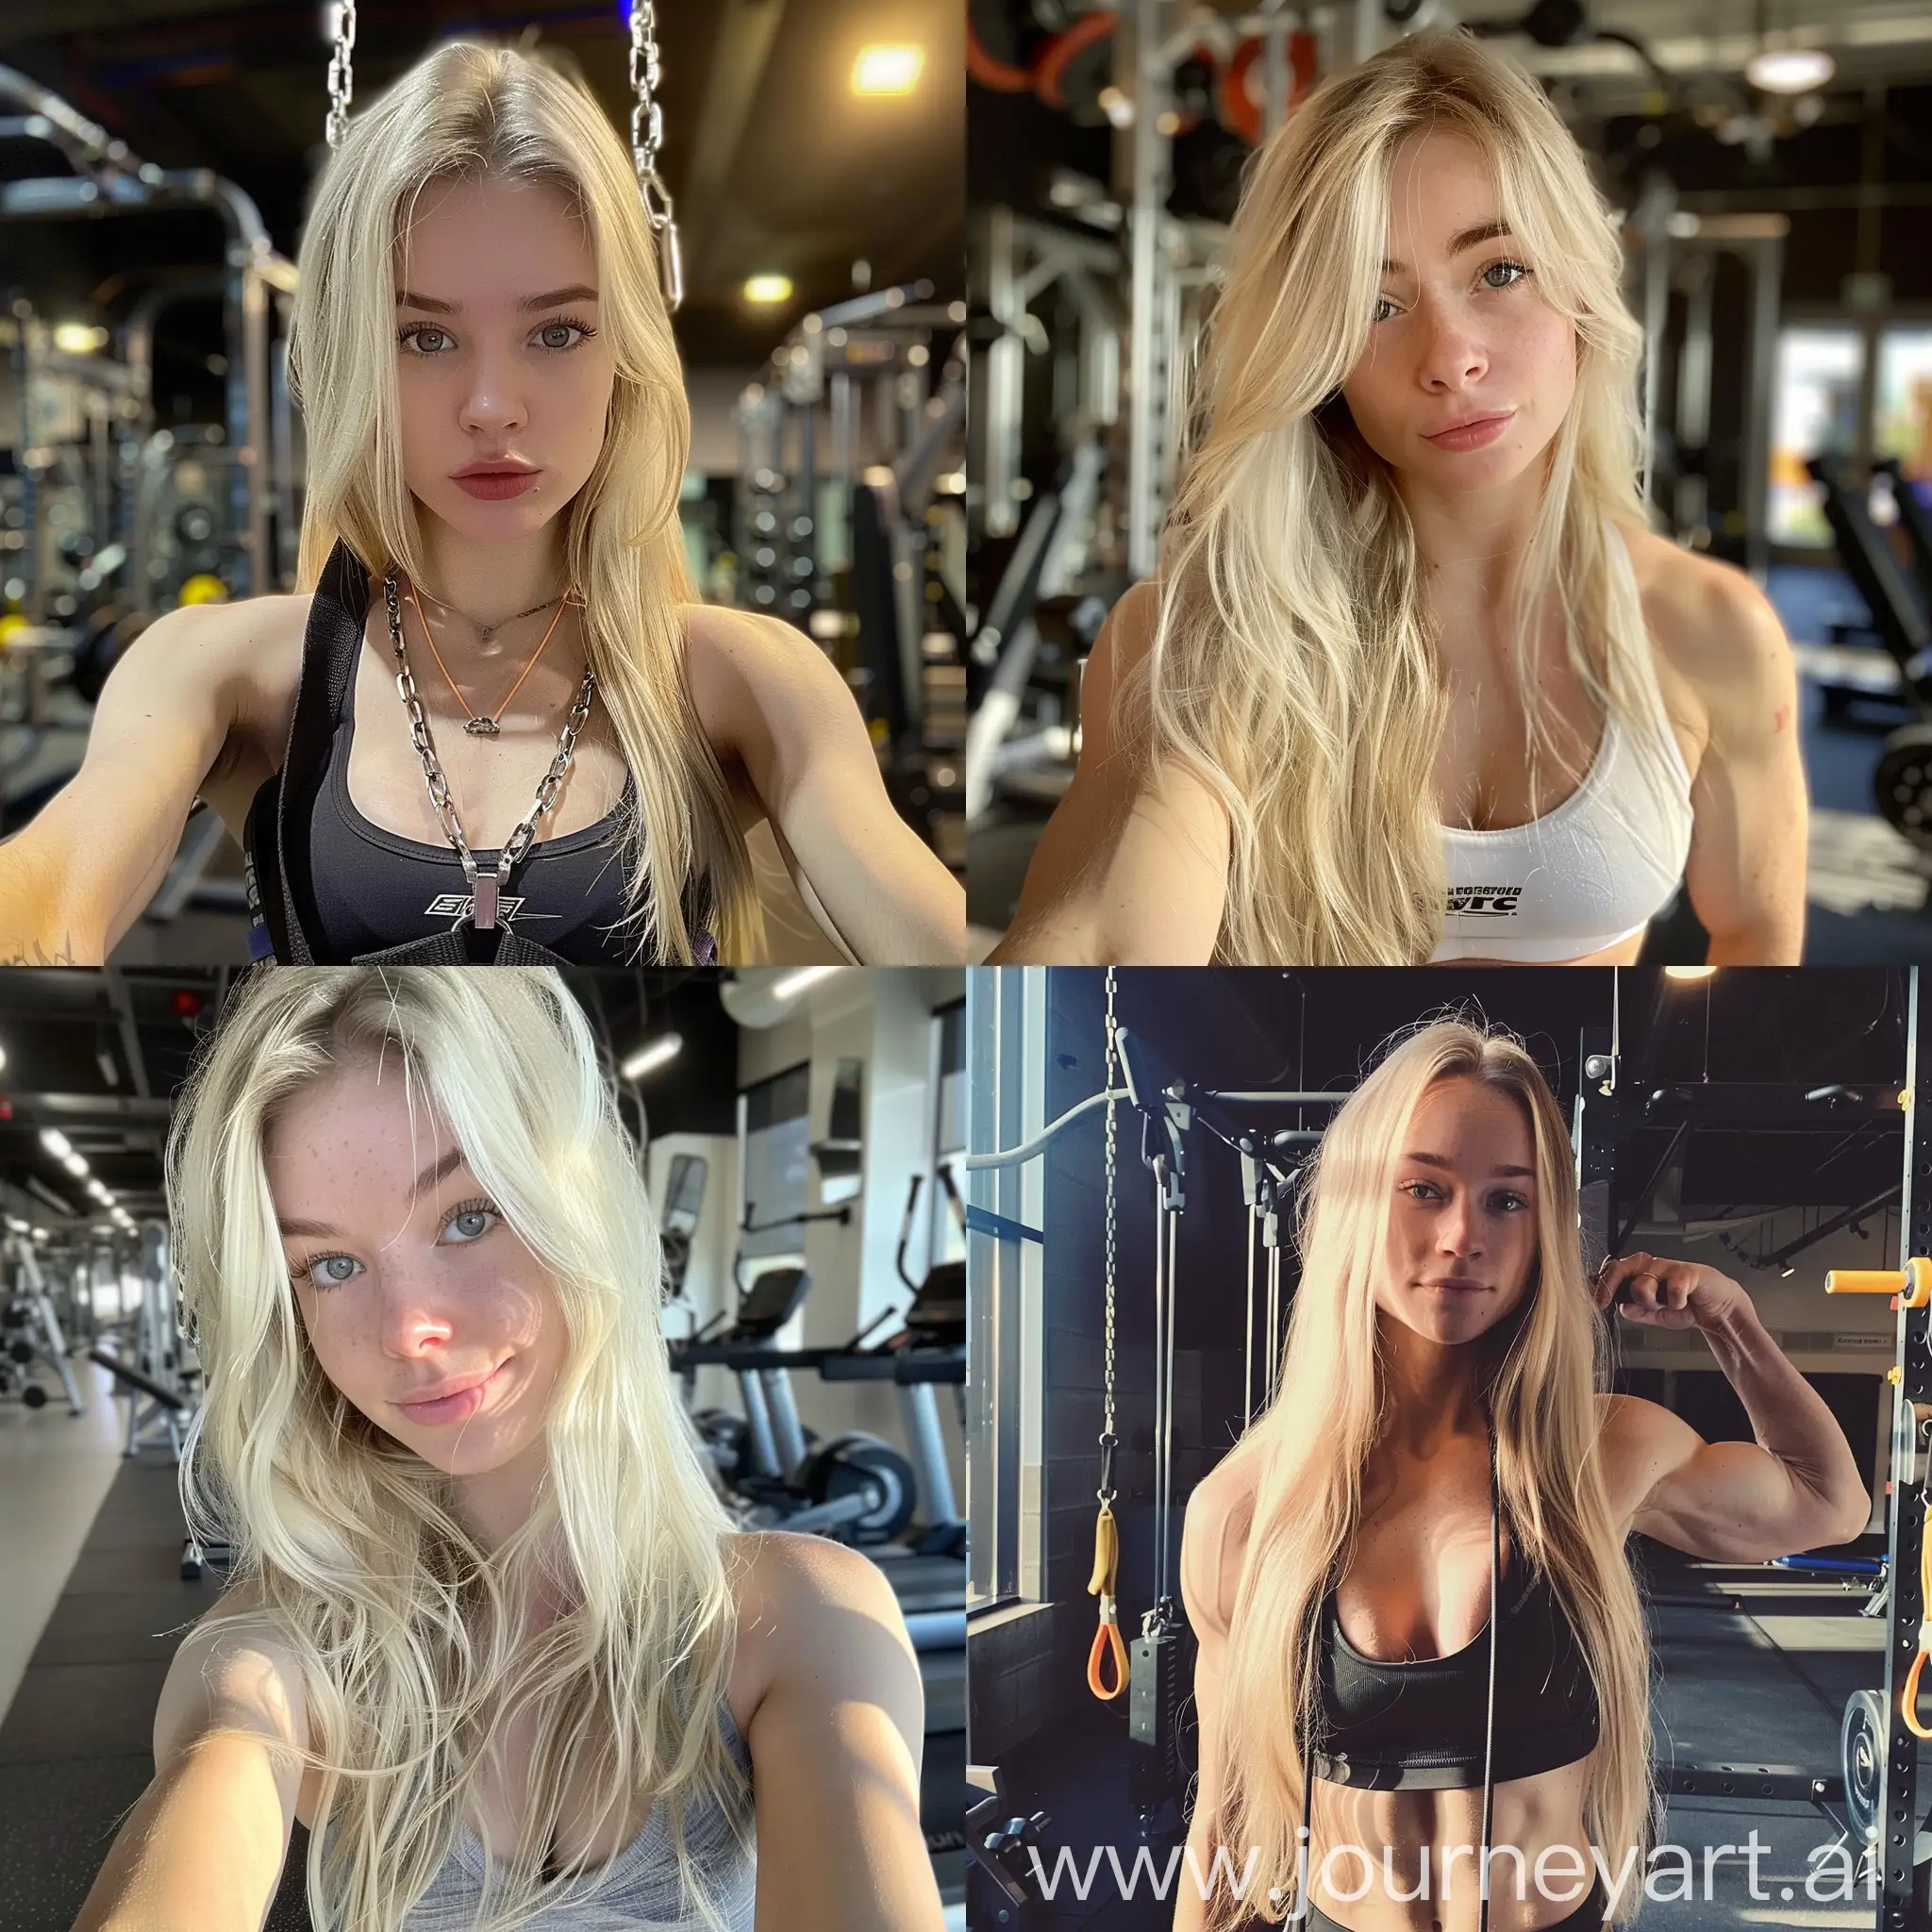 Blonde gym girl